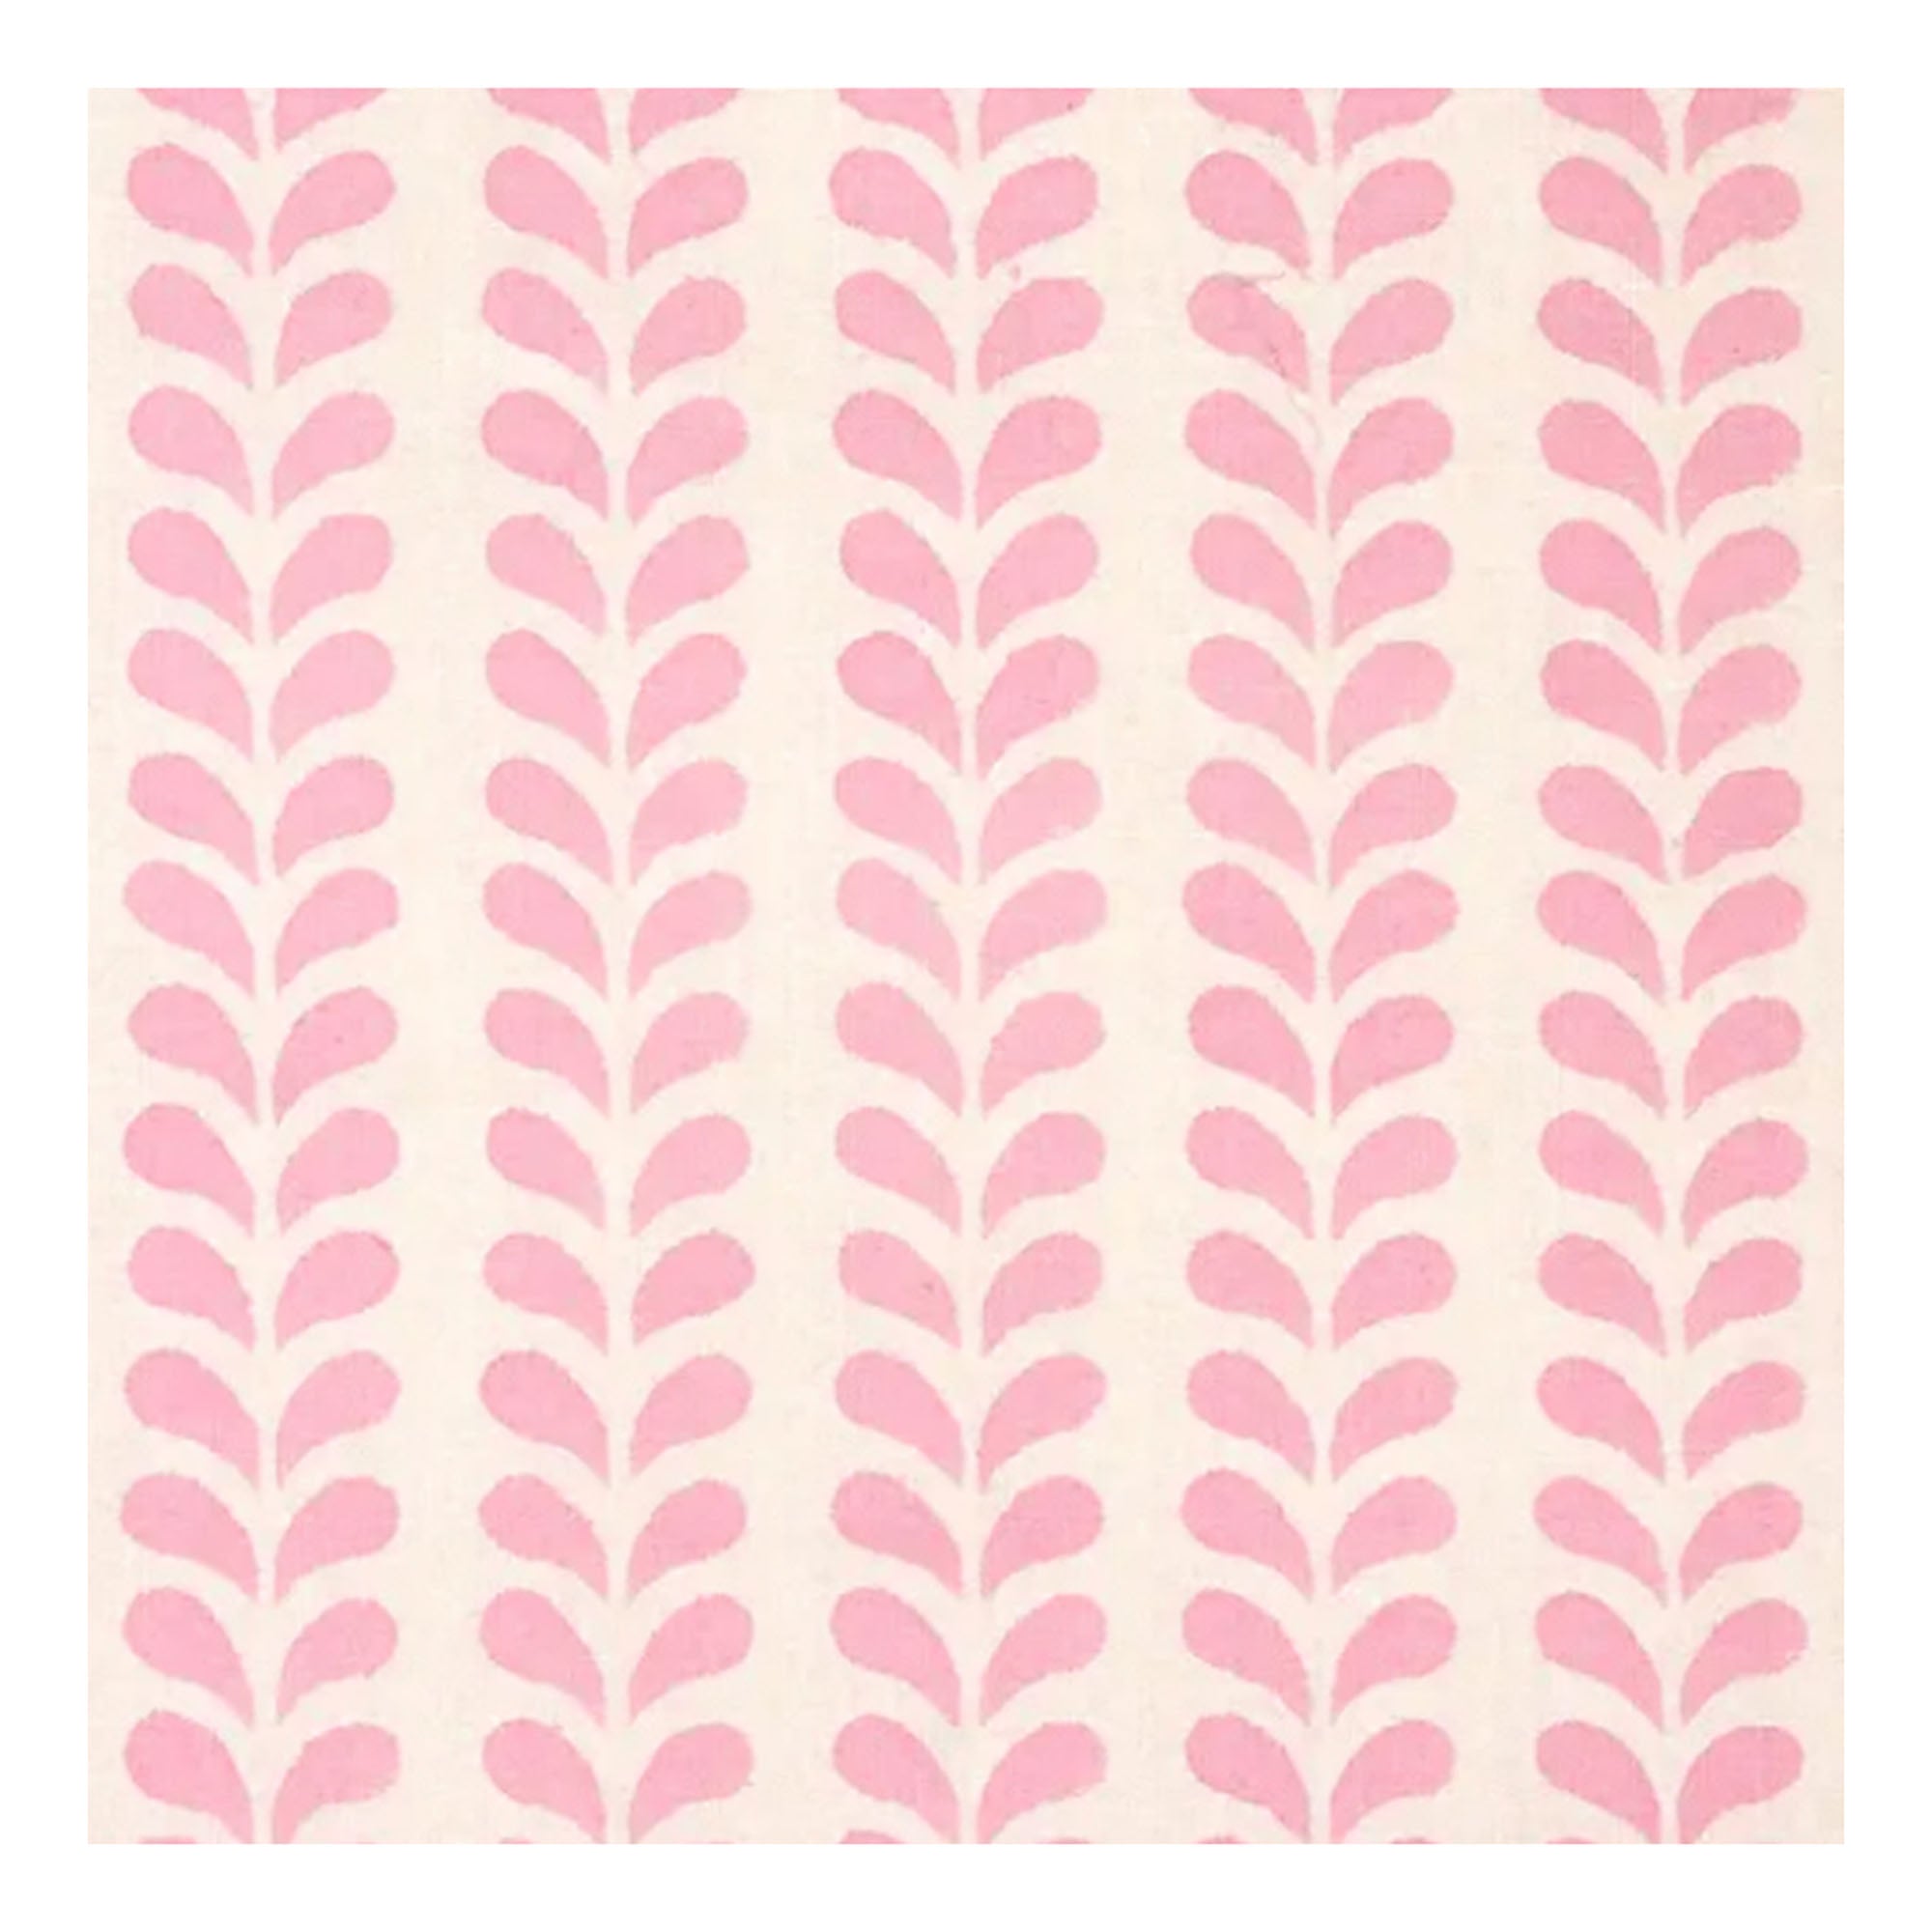 Bindi Block printed Fabric Cotton Pink